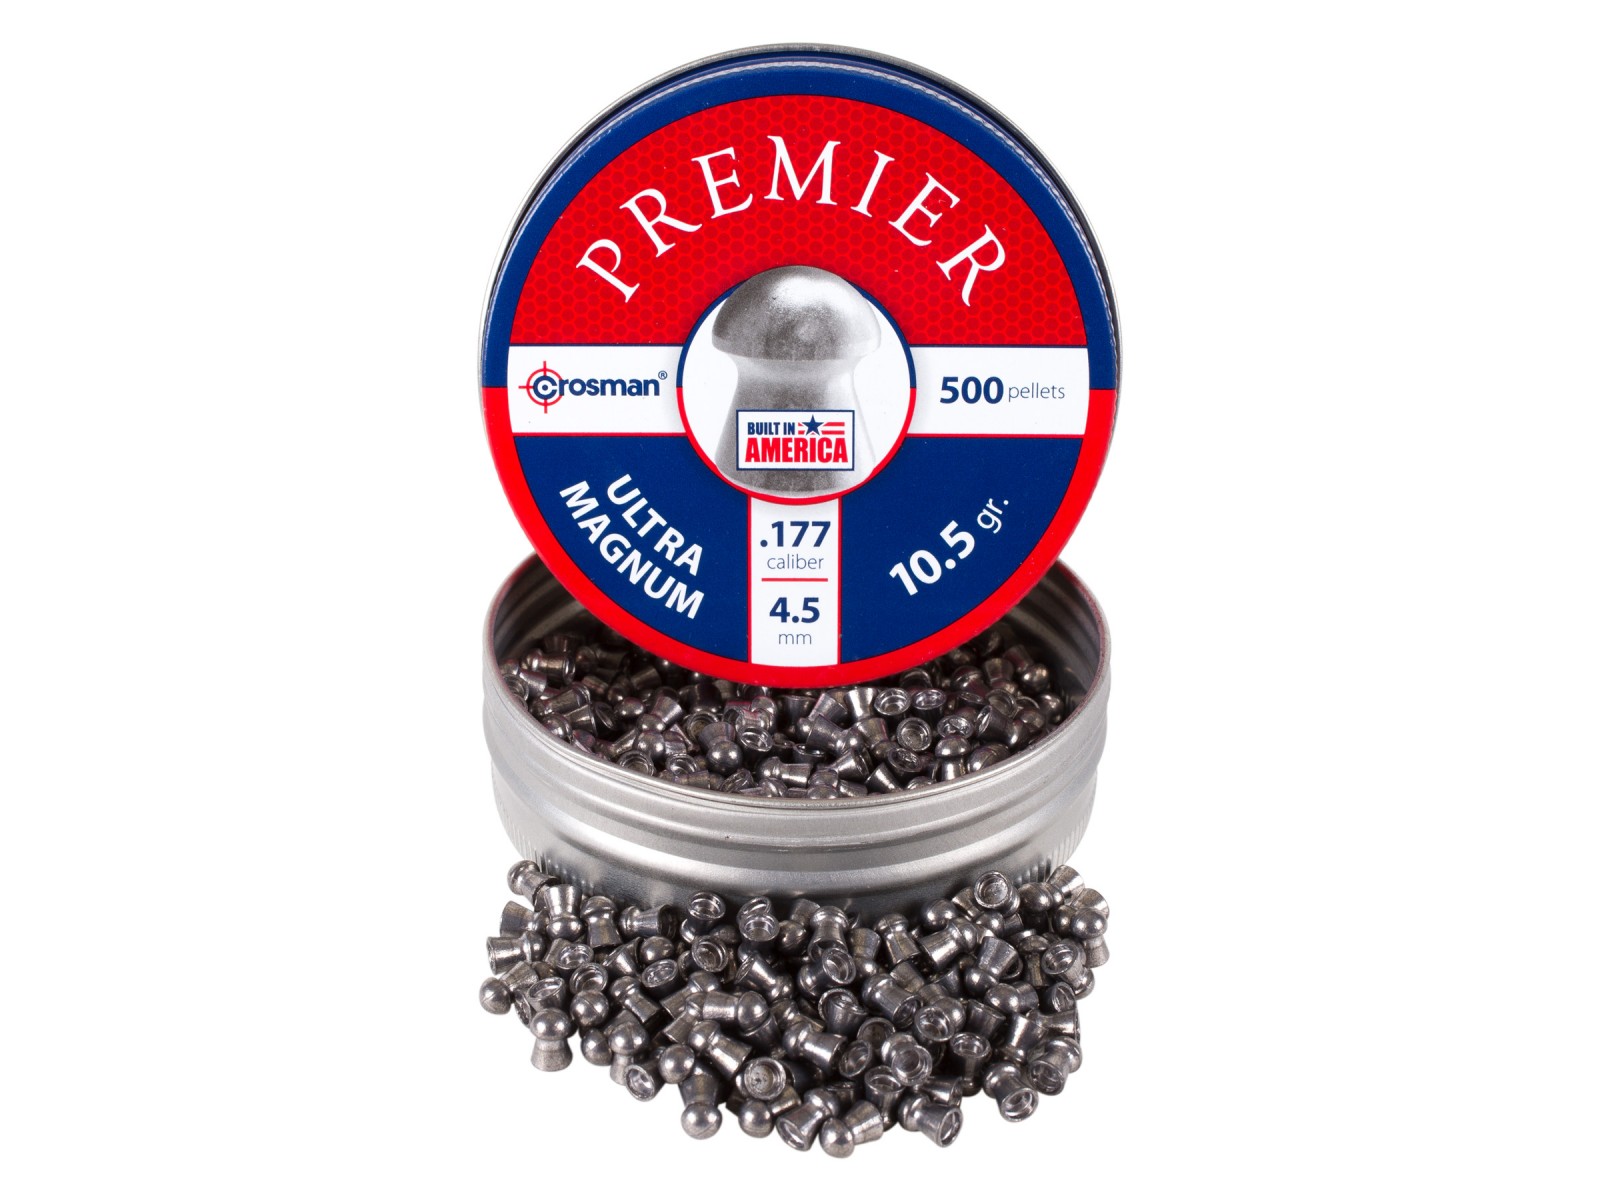 Crosman LUM77 Premier Domed Field 10.5g Target Pellets in a Tin 500 Count for sale online 